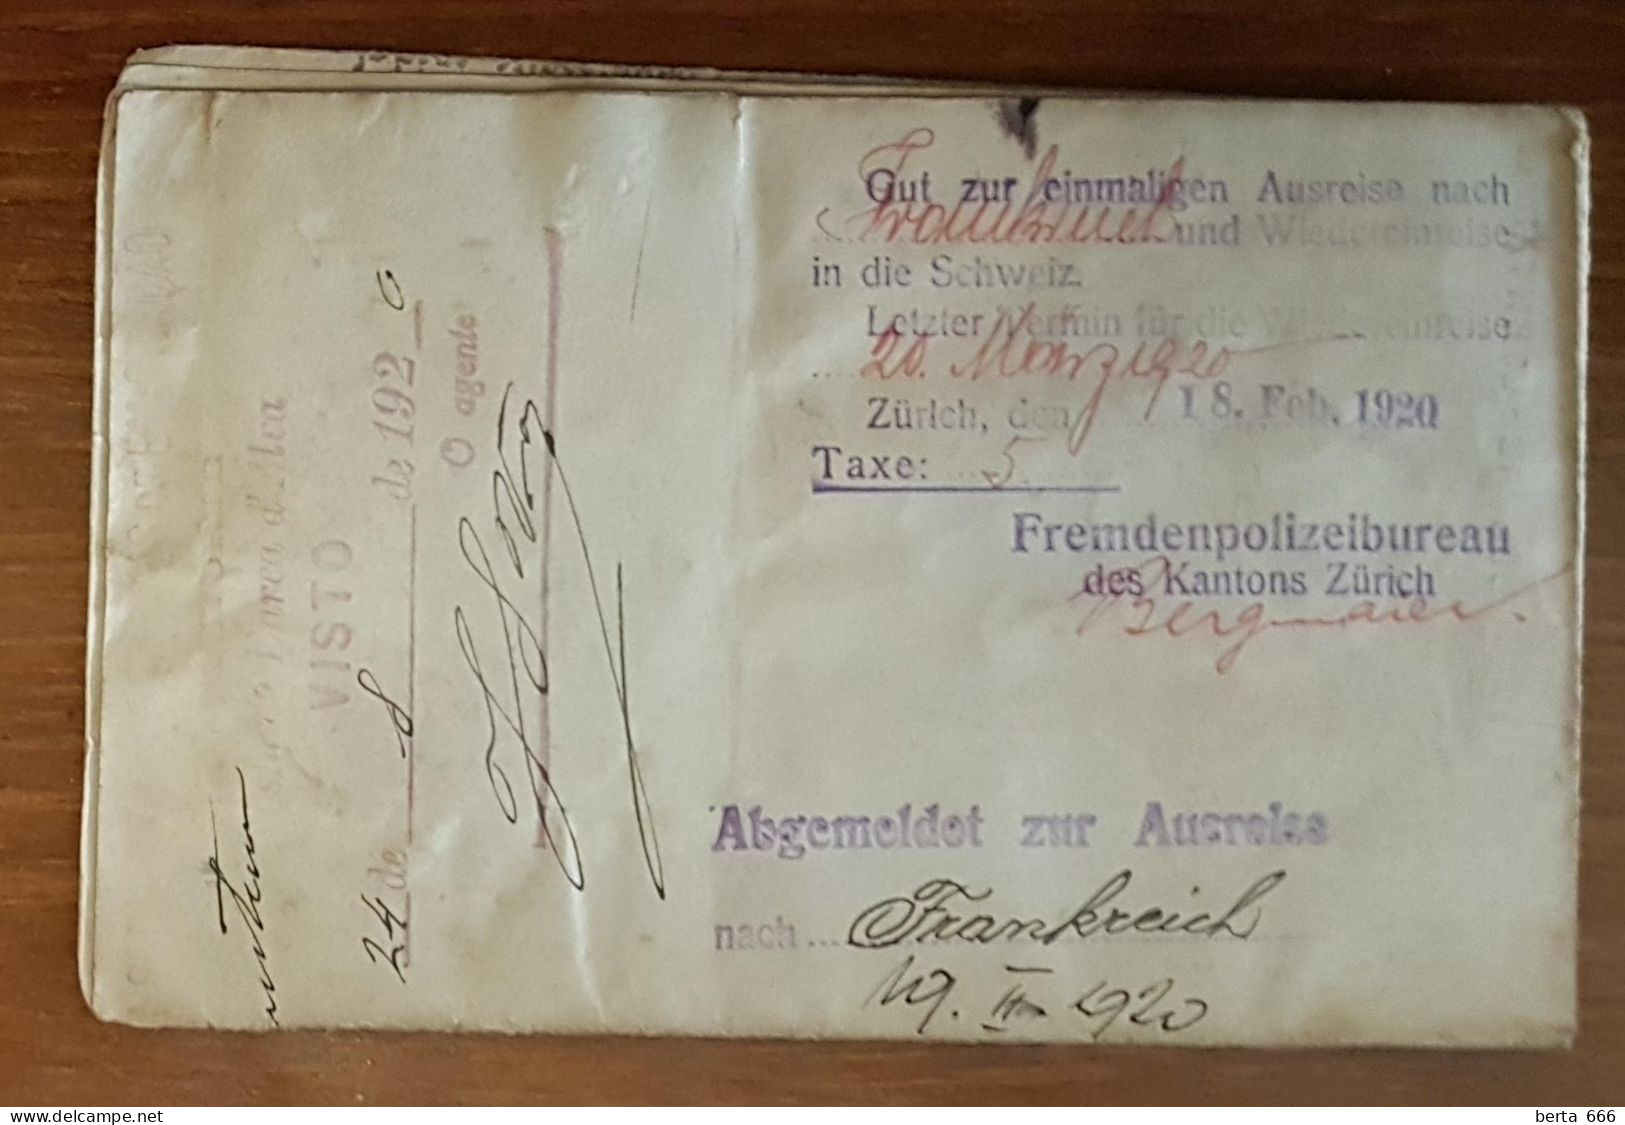 Passaporte * Consulado De Portugal Em Zurique * 1920 * Estampilha Fiscal Consulados * Passport * Passeport - Historical Documents